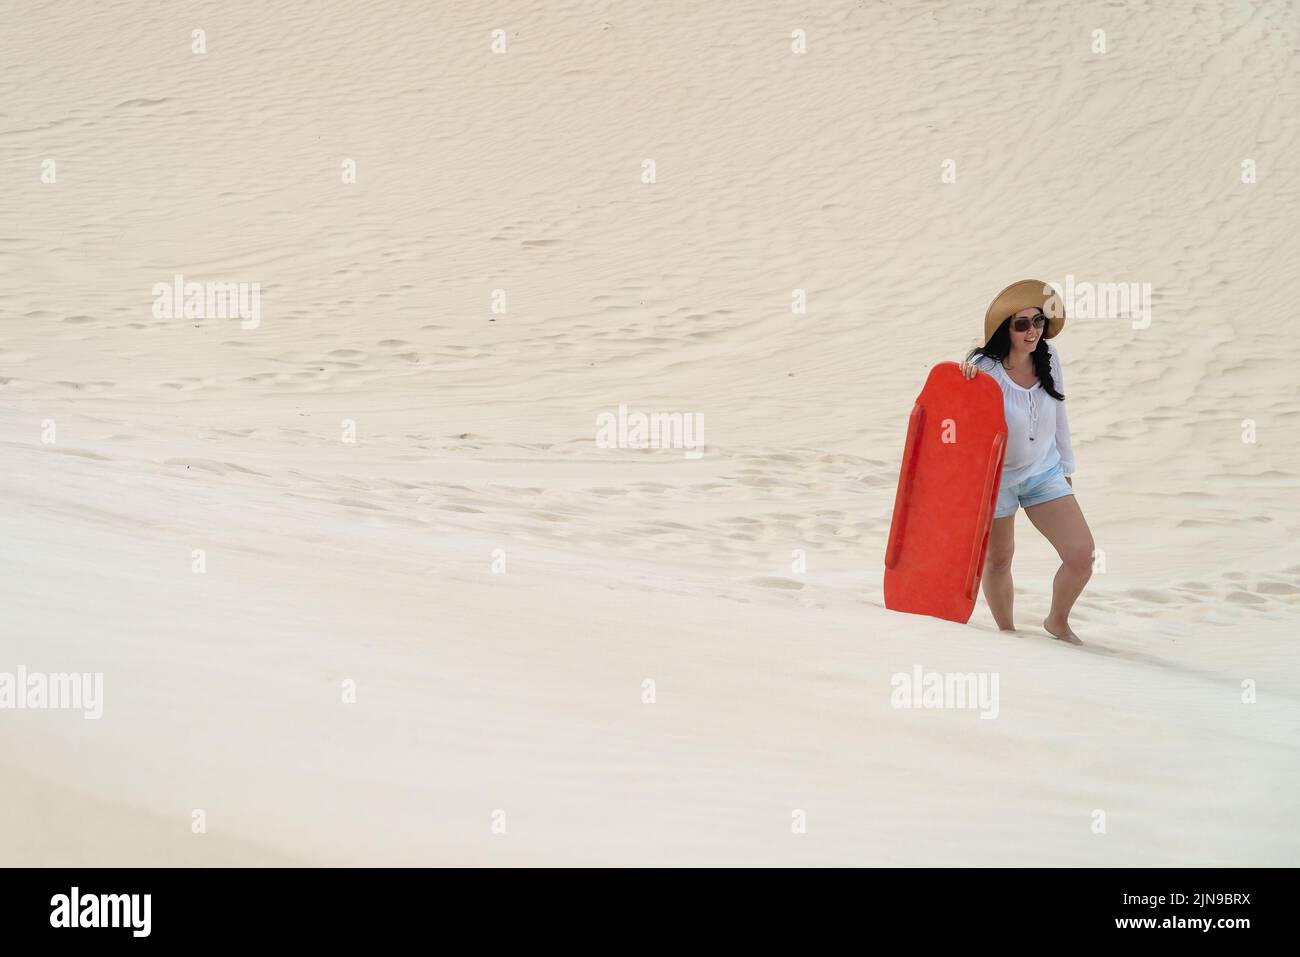 Woman climbing up a sand dune with a sandboard, Kangaroo Island, South Australia Stock Photo